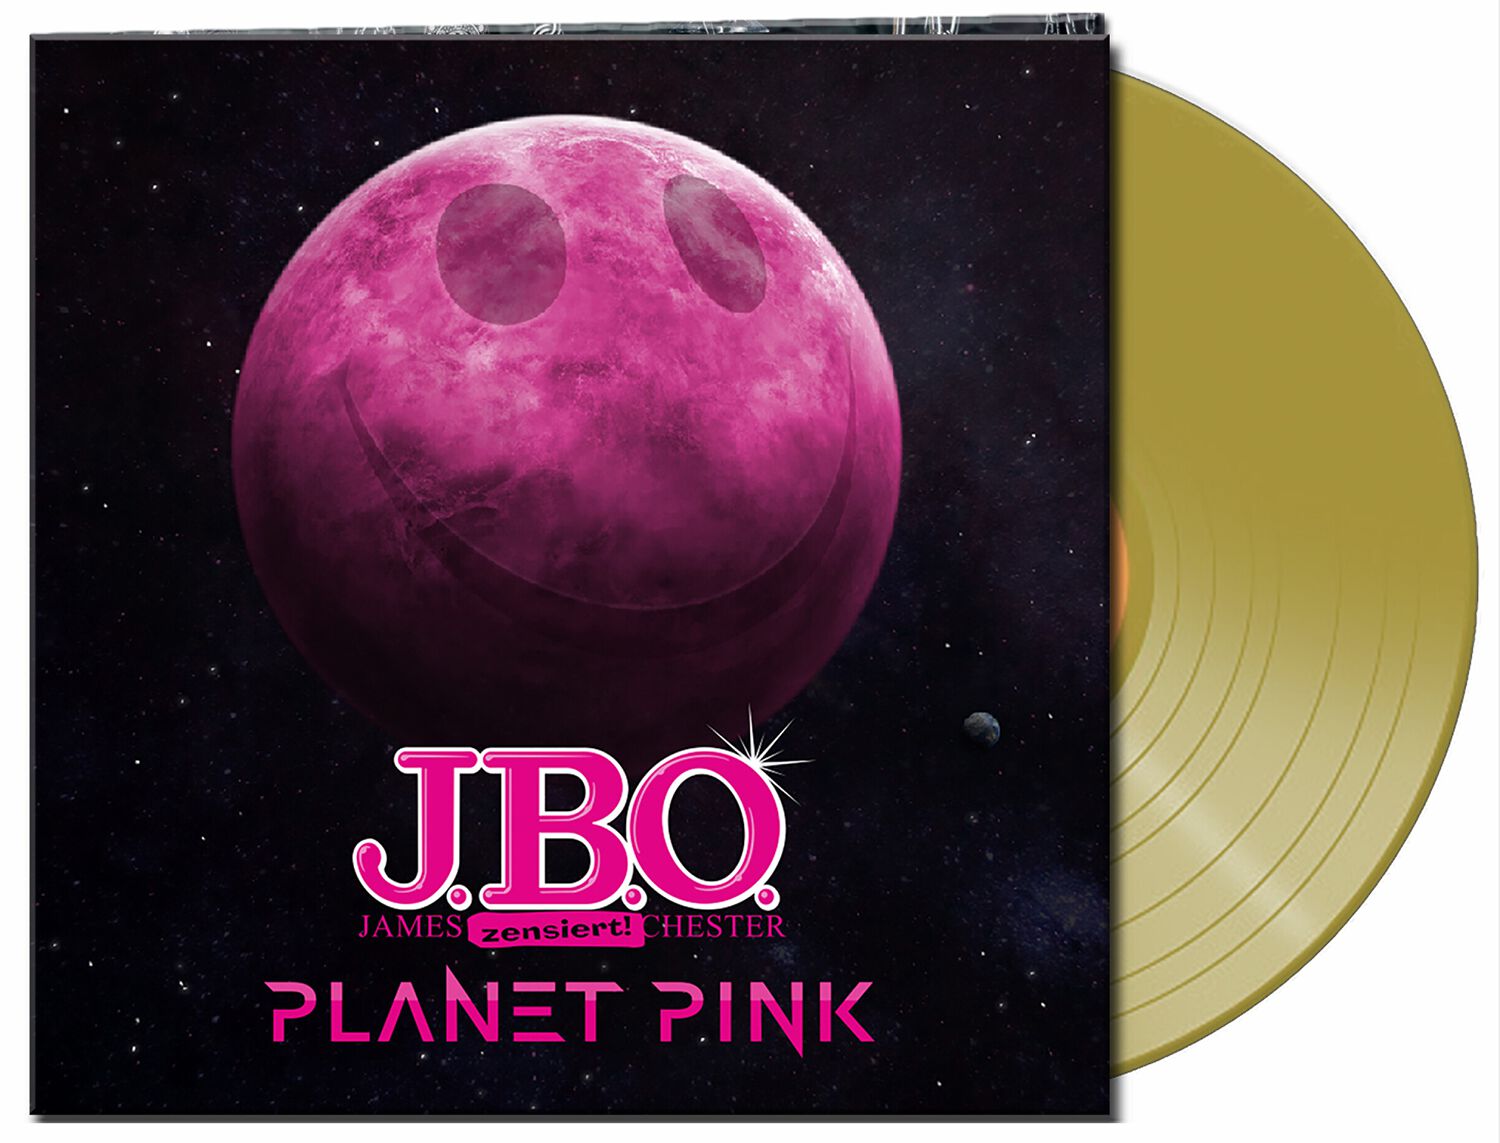 Image of J.B.O. Planet Pink LP farbig